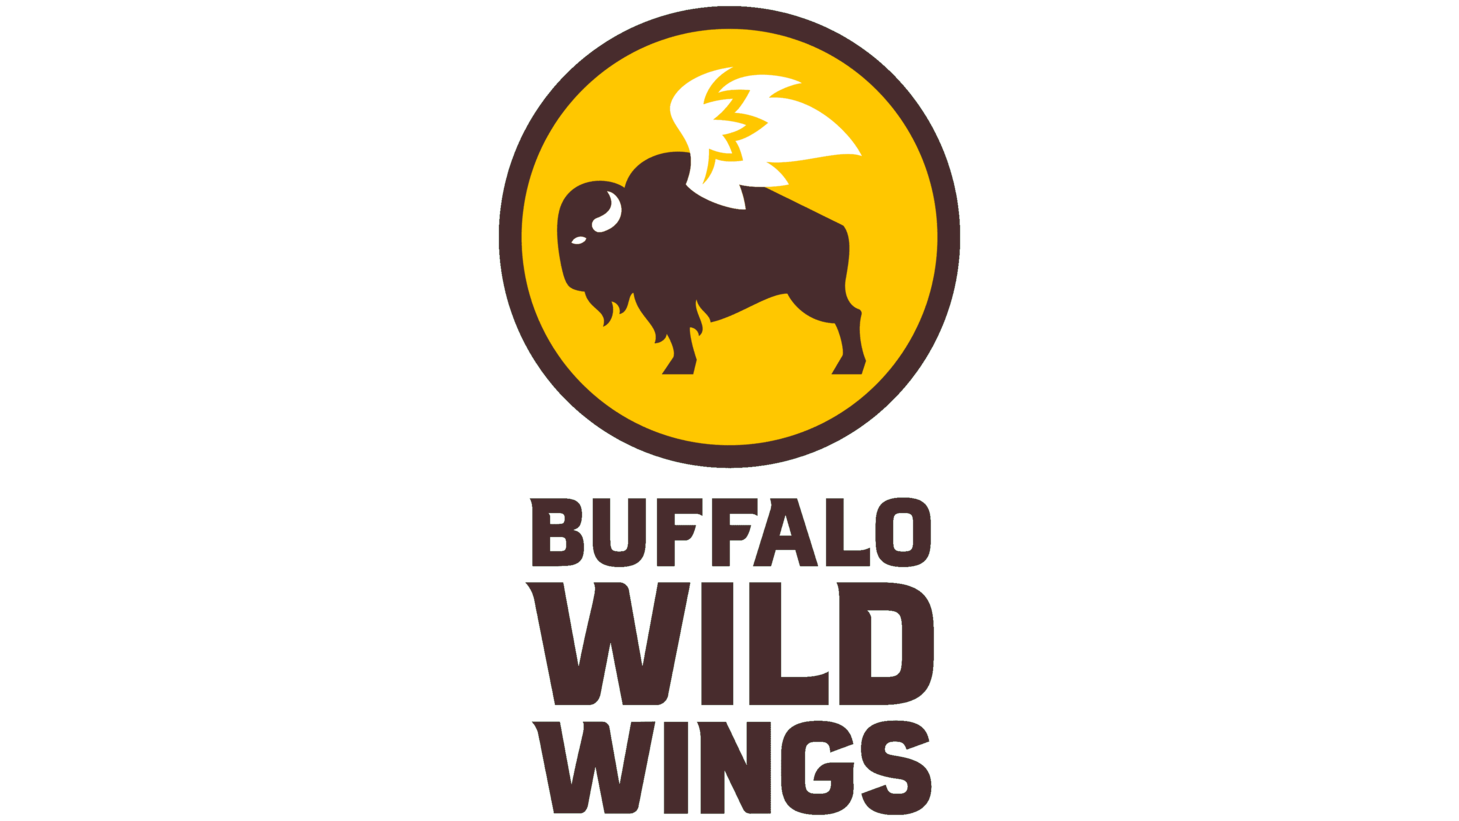 Buffalo wild wings symbol